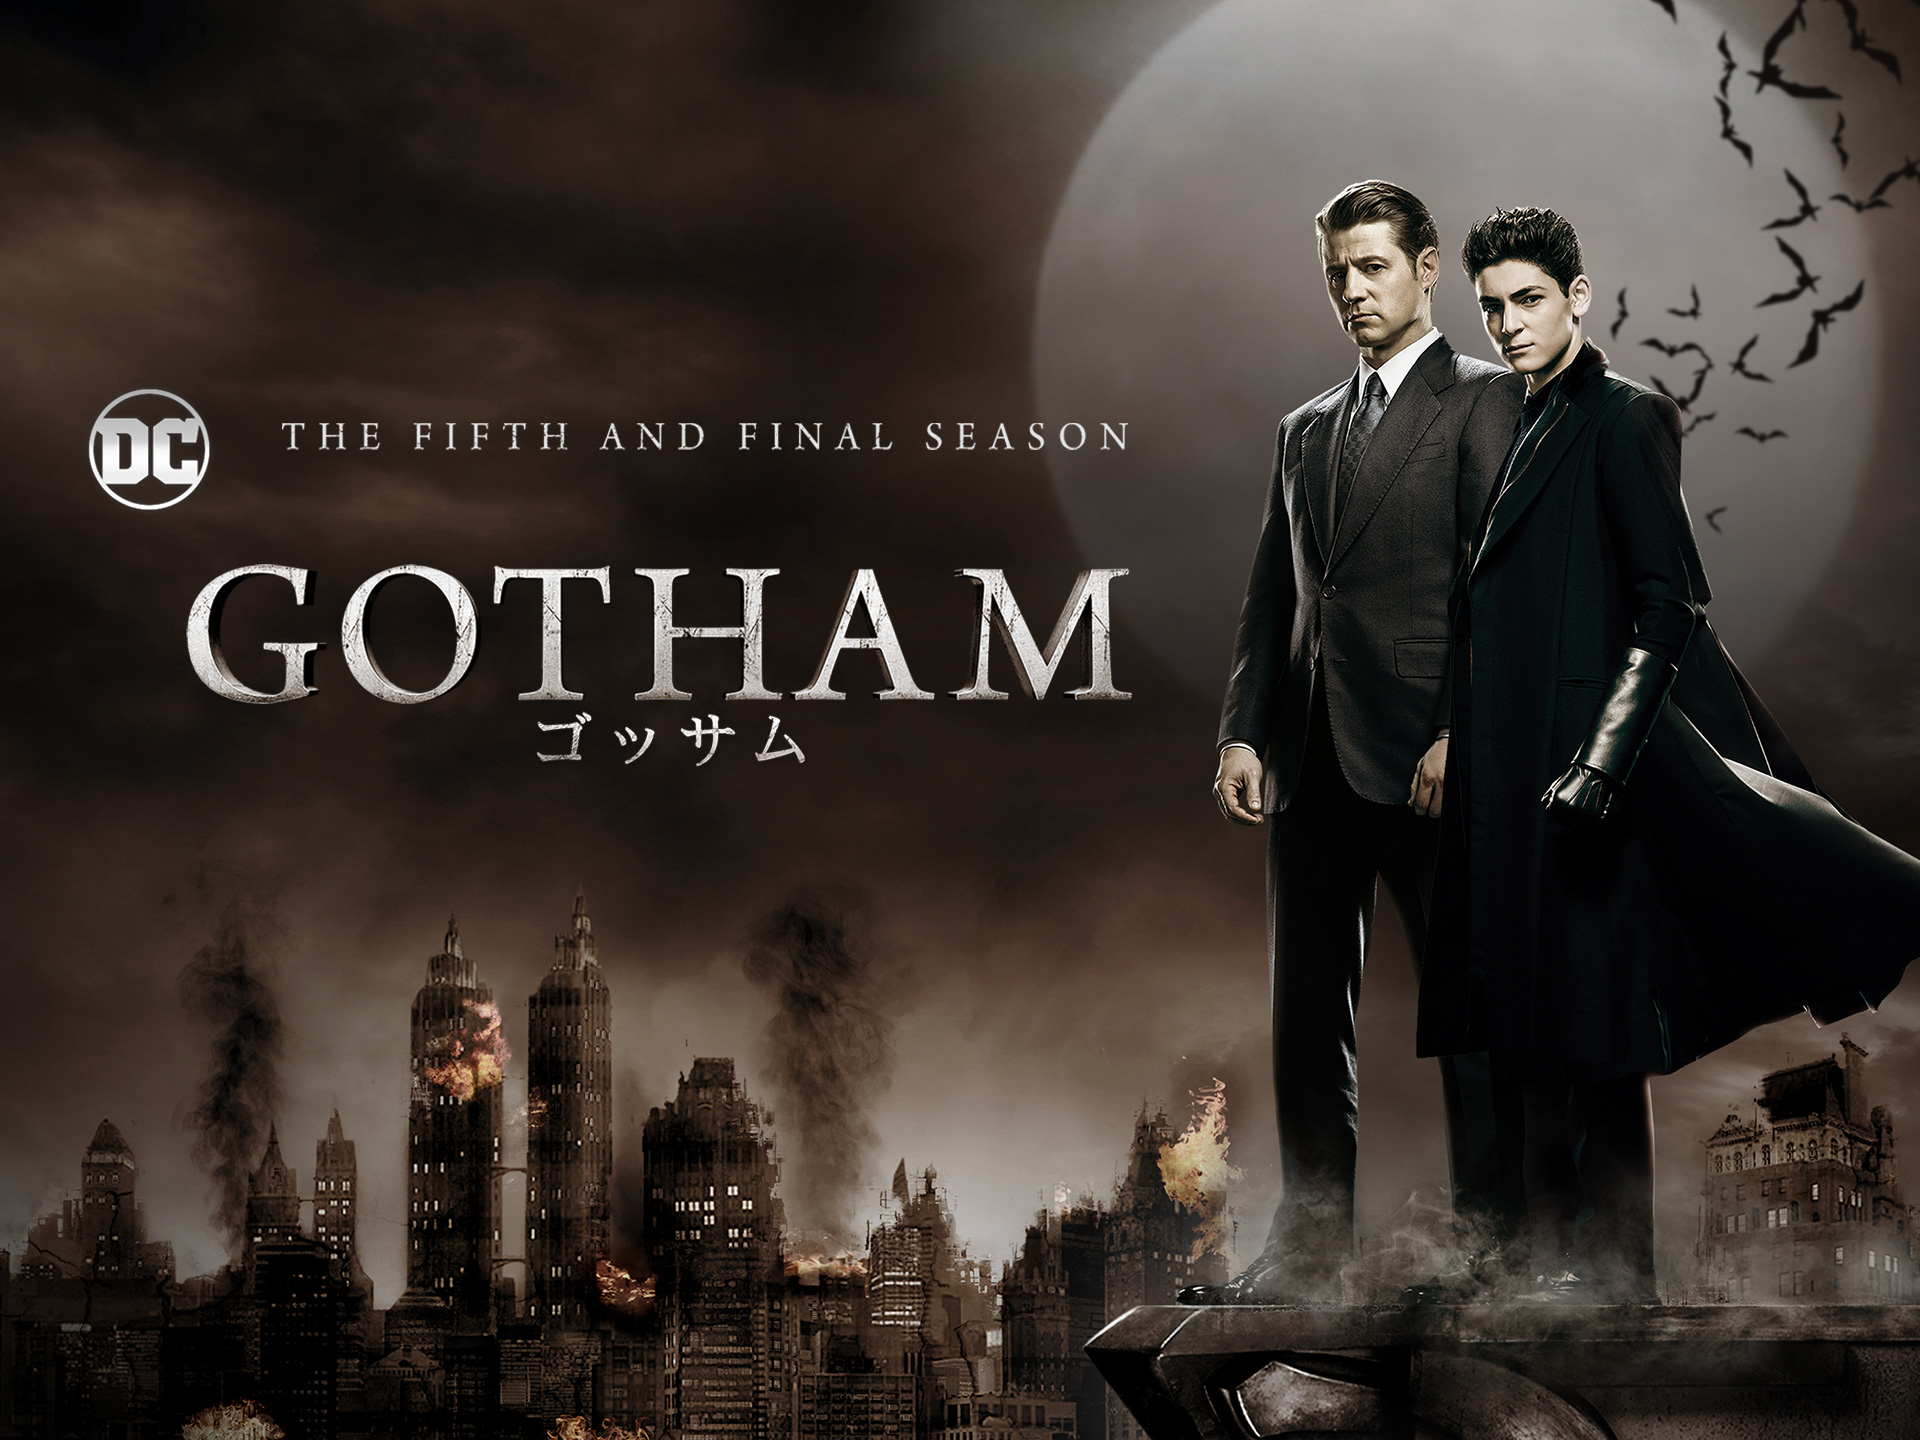 Gotham ゴッサム ファイナル シーズン 第1話 第6話のまとめフル動画 初月無料 動画配信サービスのビデオマーケット